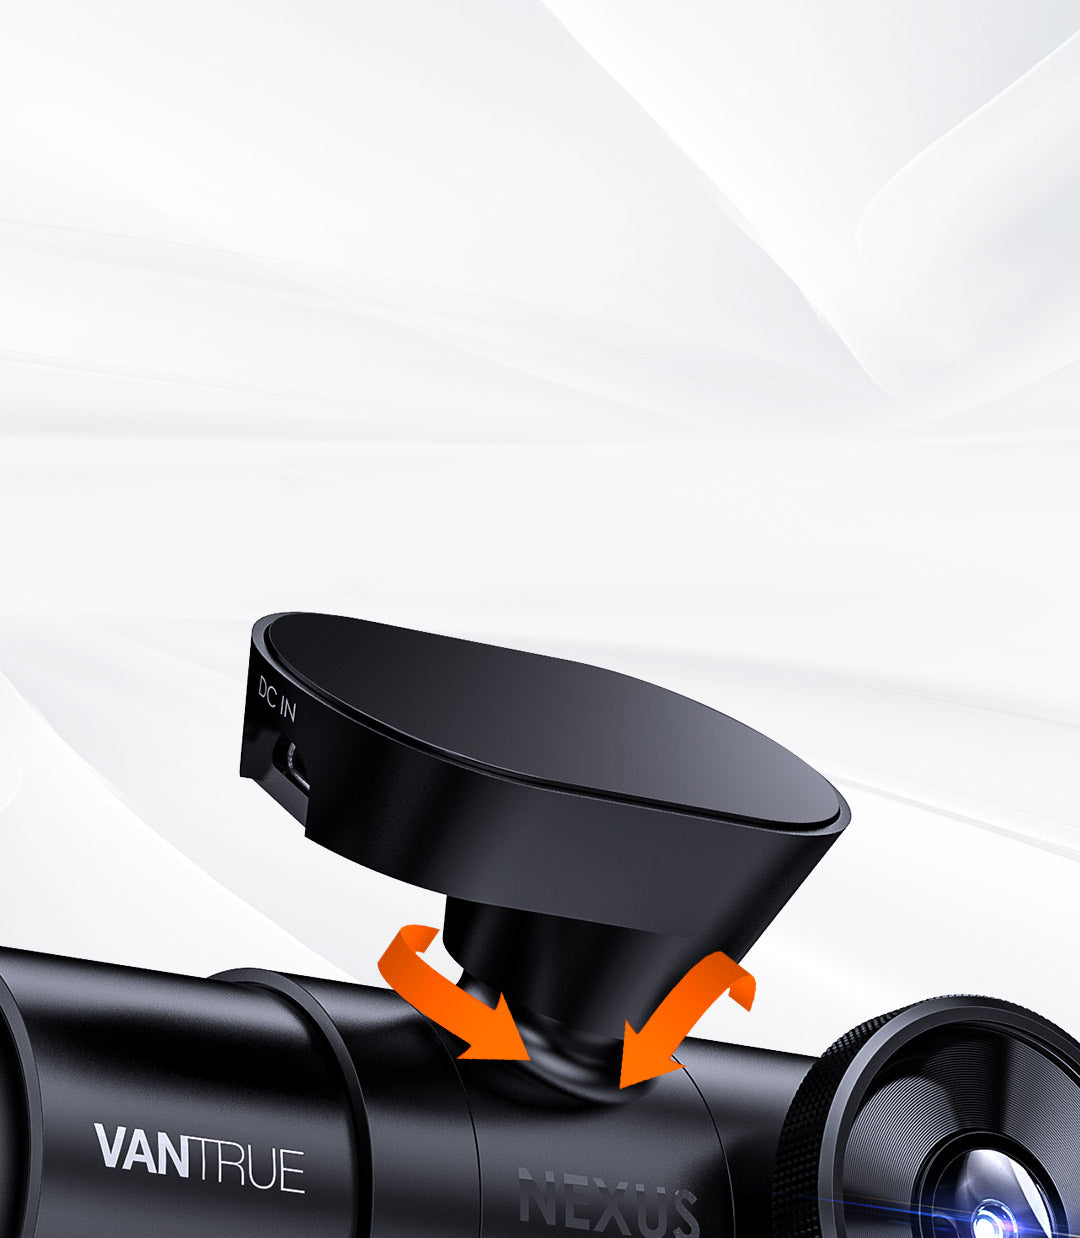 Vantrue Nexus 4 Pro (N4 Pro) 3-channel 4K Advanced Dashcam